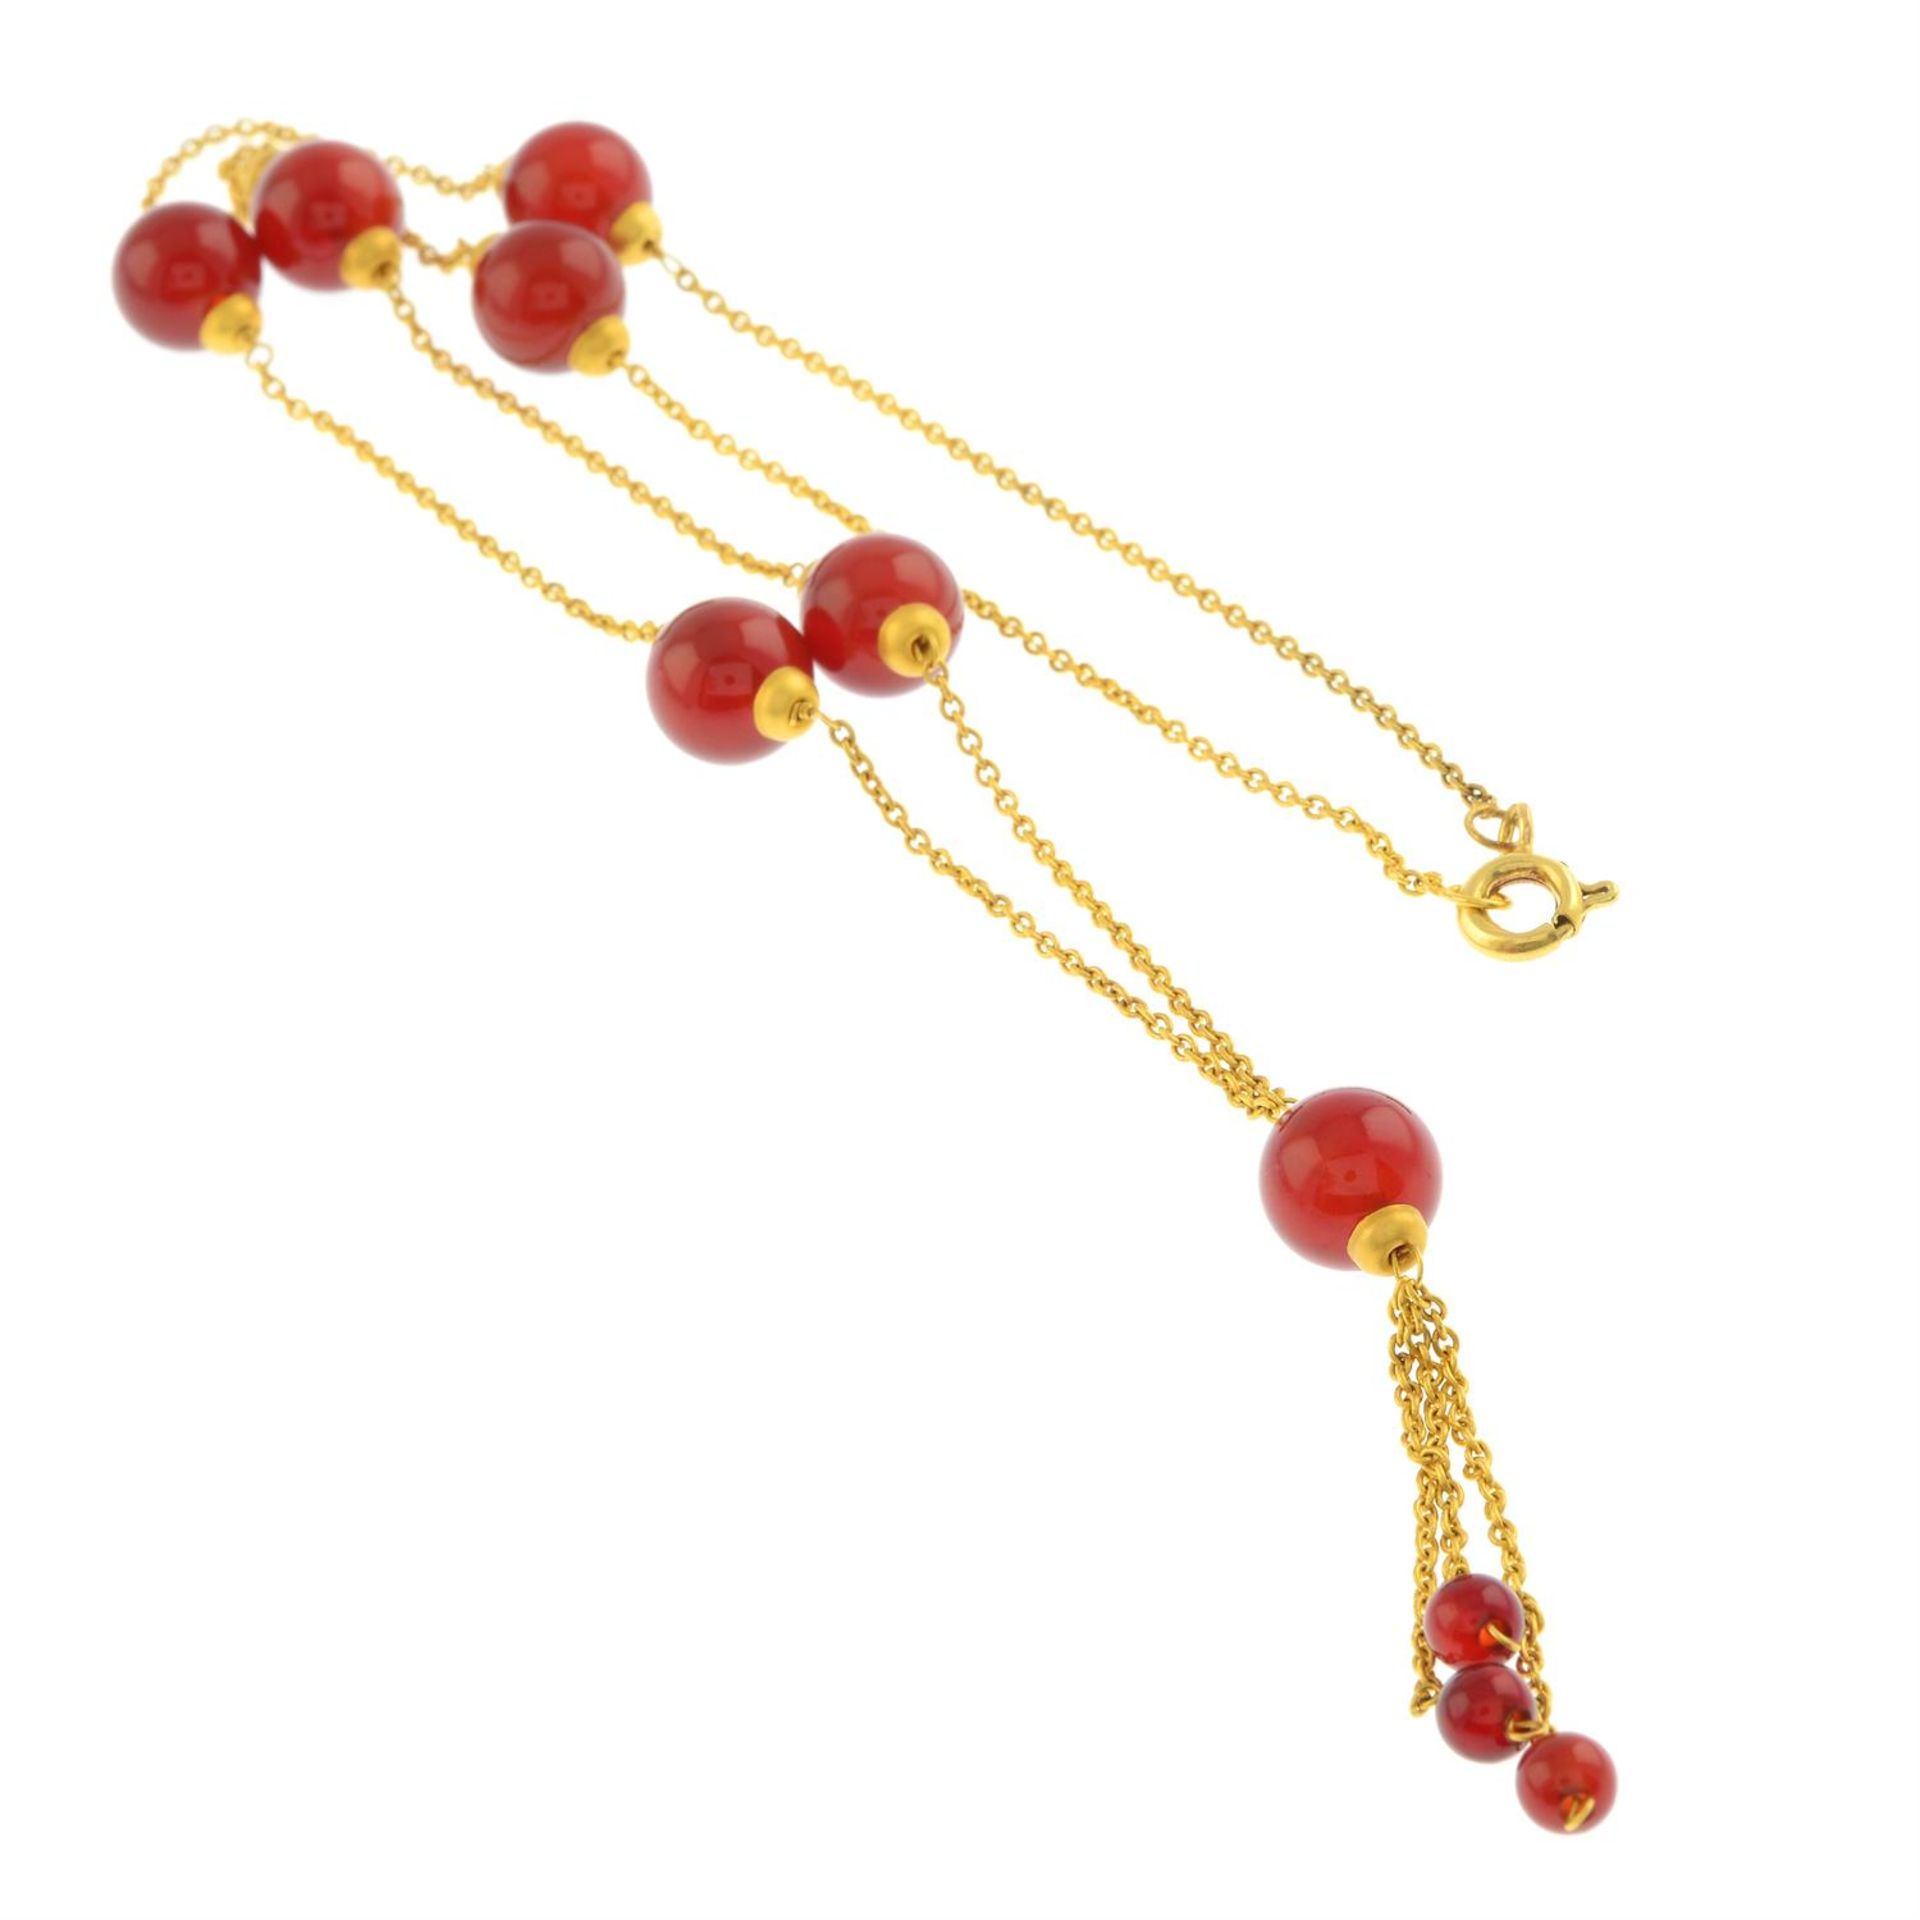 Carnelian necklace - Image 2 of 2